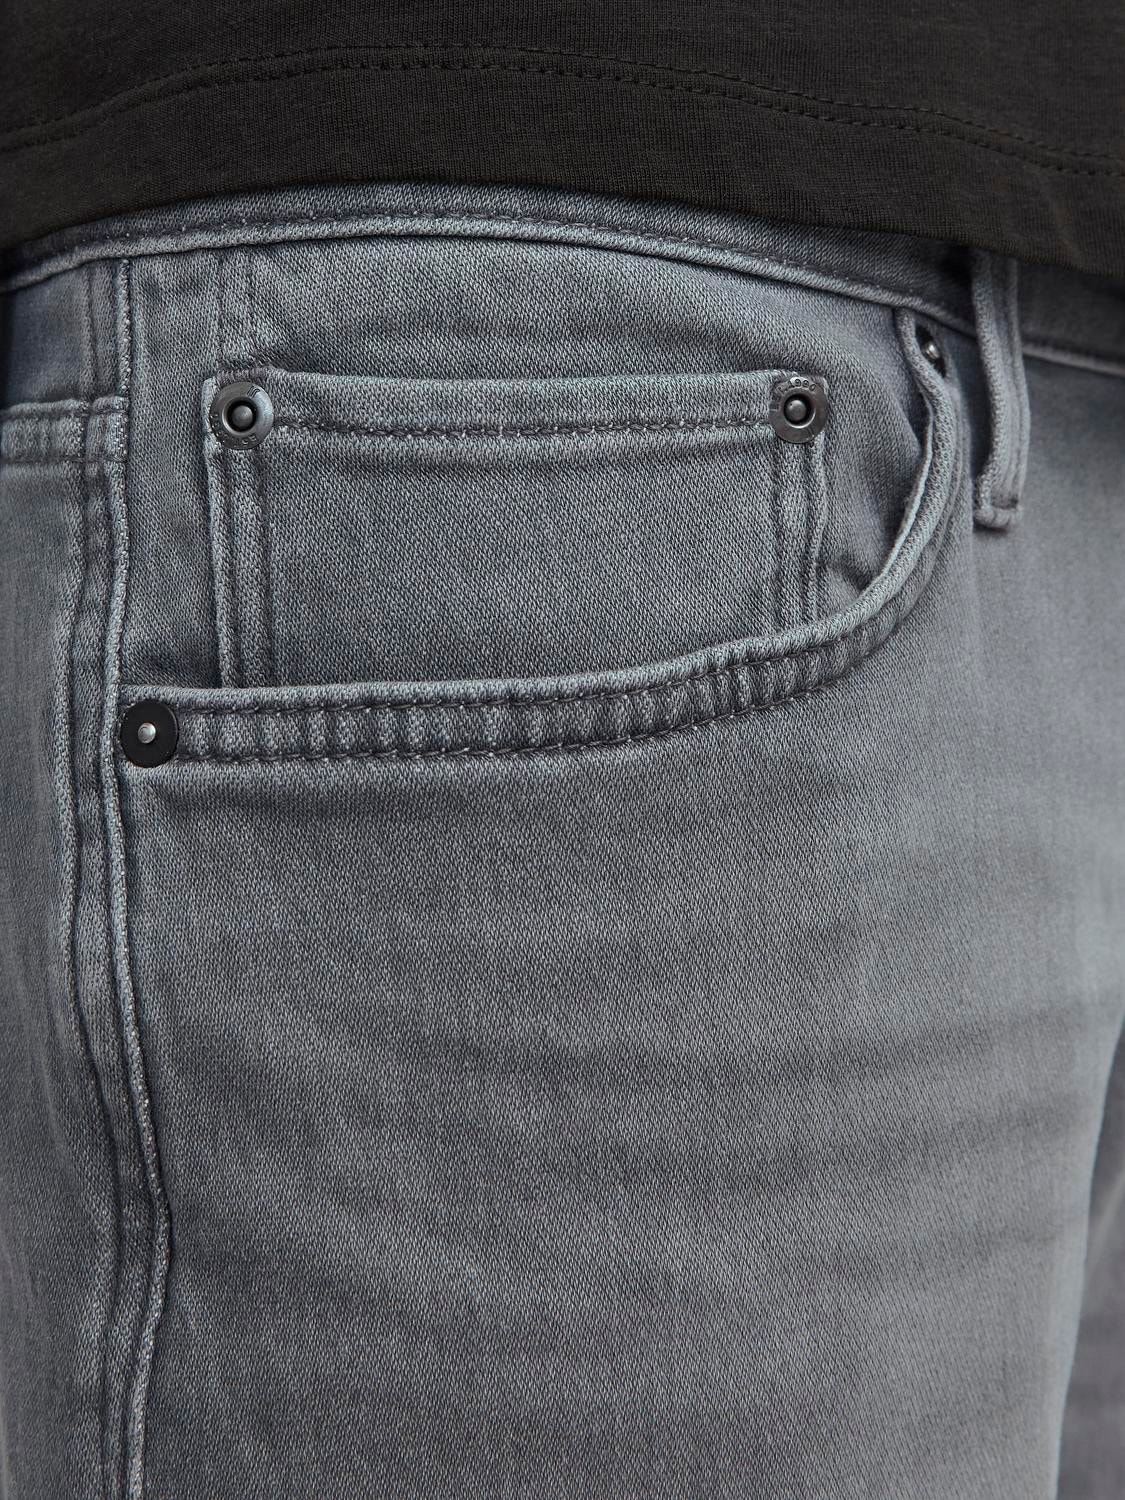 Jack & Jones Regular Fit Jeans Shorts -Grey Denim - 12249214